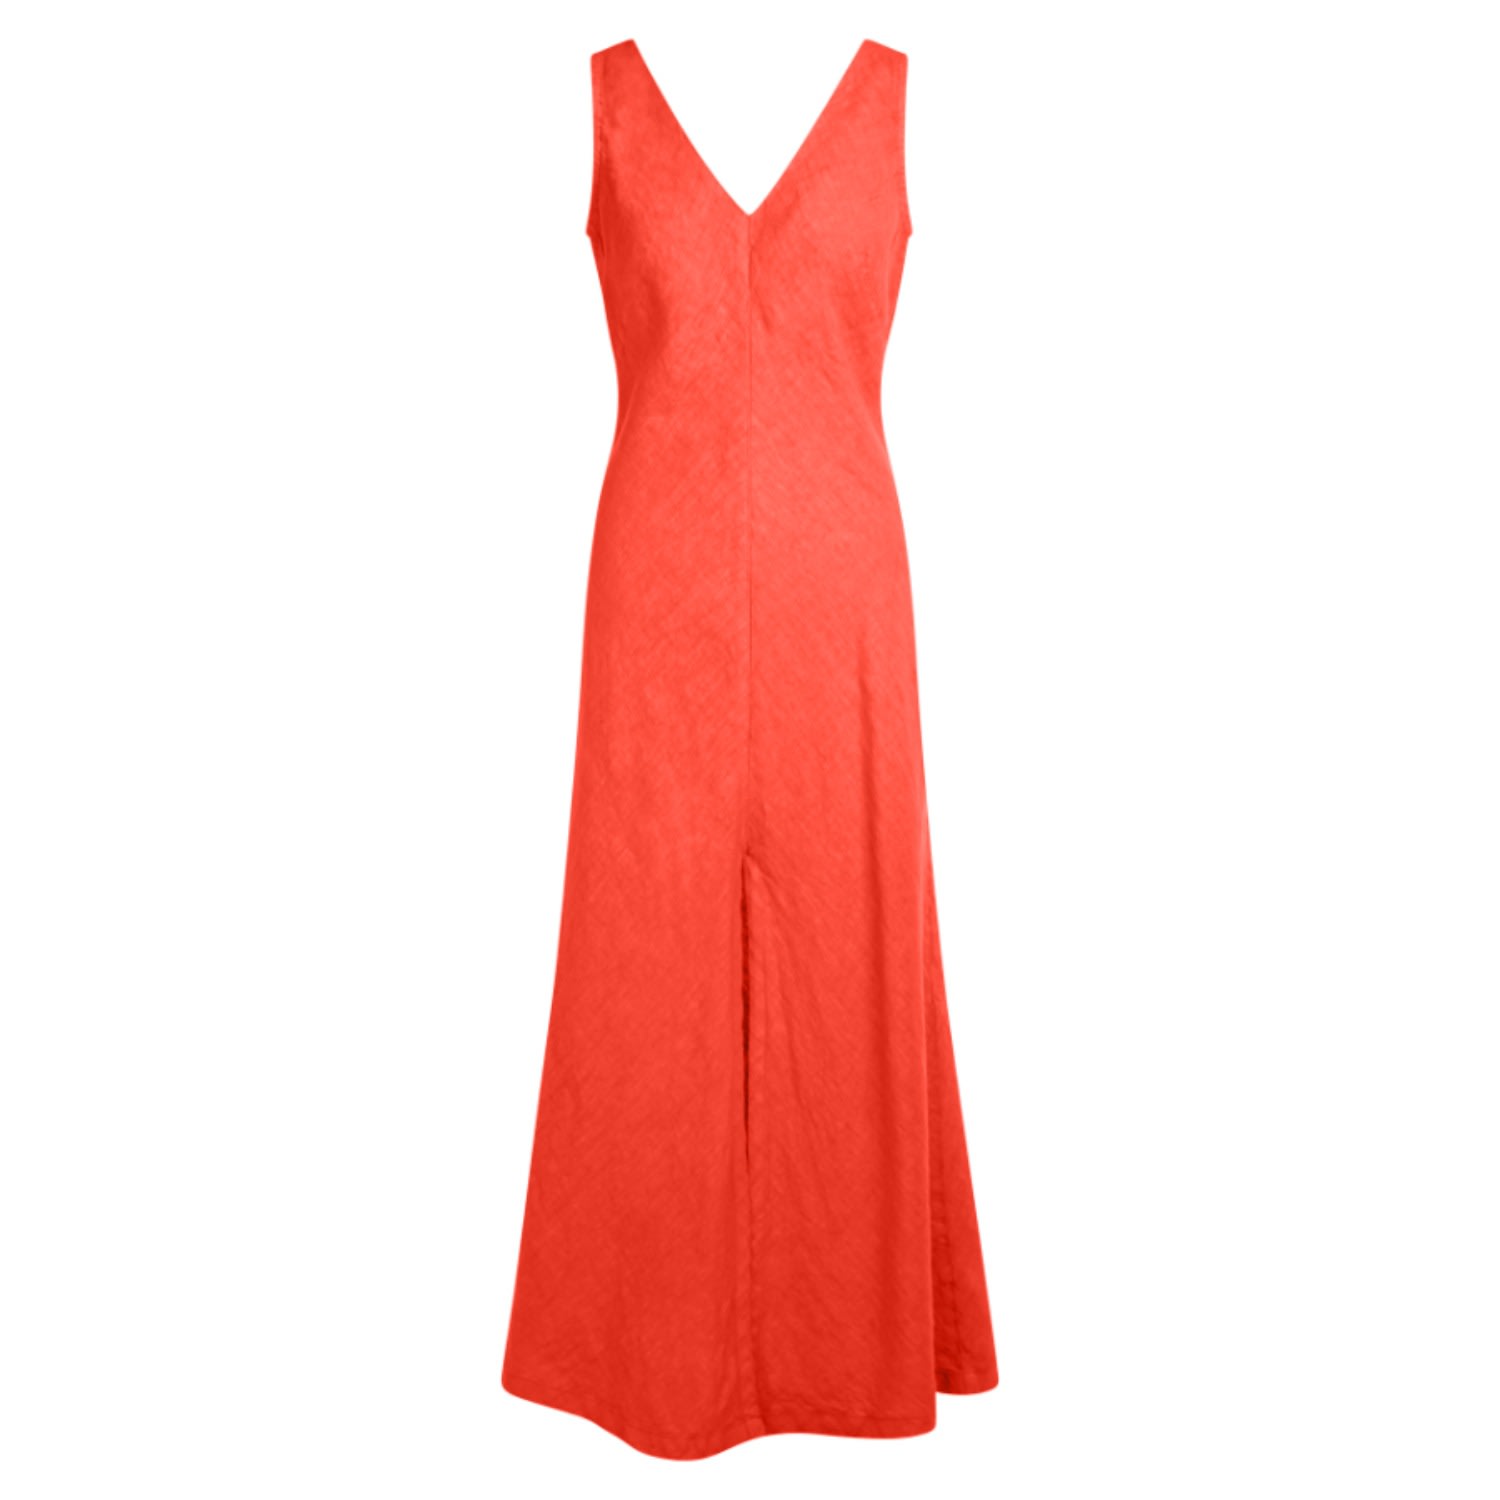 Women’s Red "V" Neck Maxi Linen Dress - Coral Reef Medium Haris Cotton